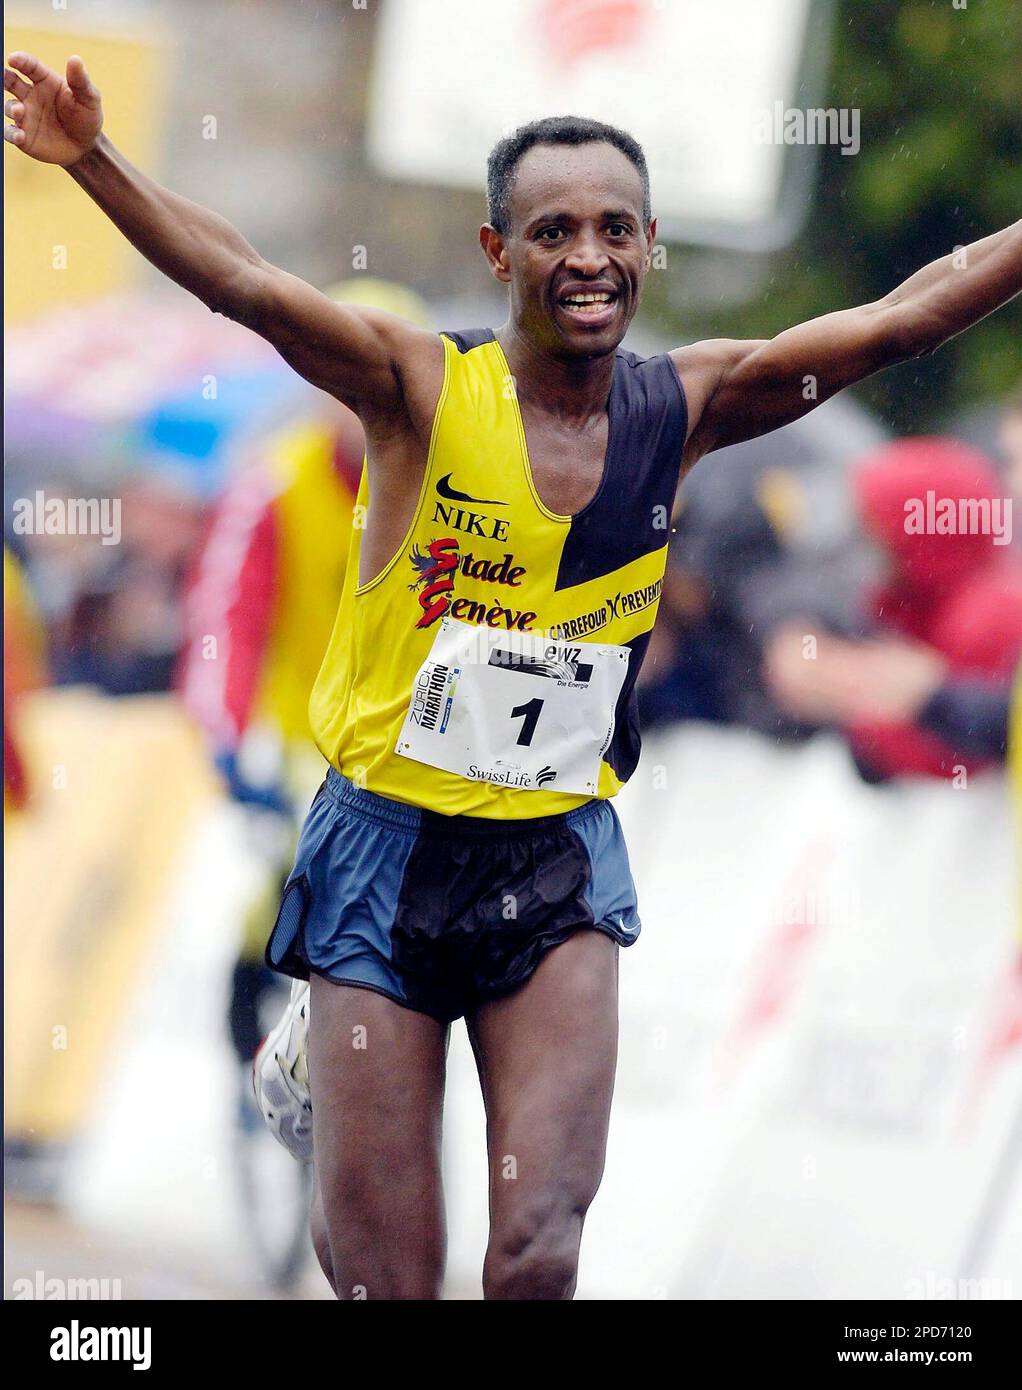 Eticha Tesfaye of Ethiopia celebrates prior to crossing the finish line to  win the marathon in Zurich, Switzerland, Sunday, April 9, 2006. (AP  Photo/Keystone,Walter Bieri Stock Photo - Alamy